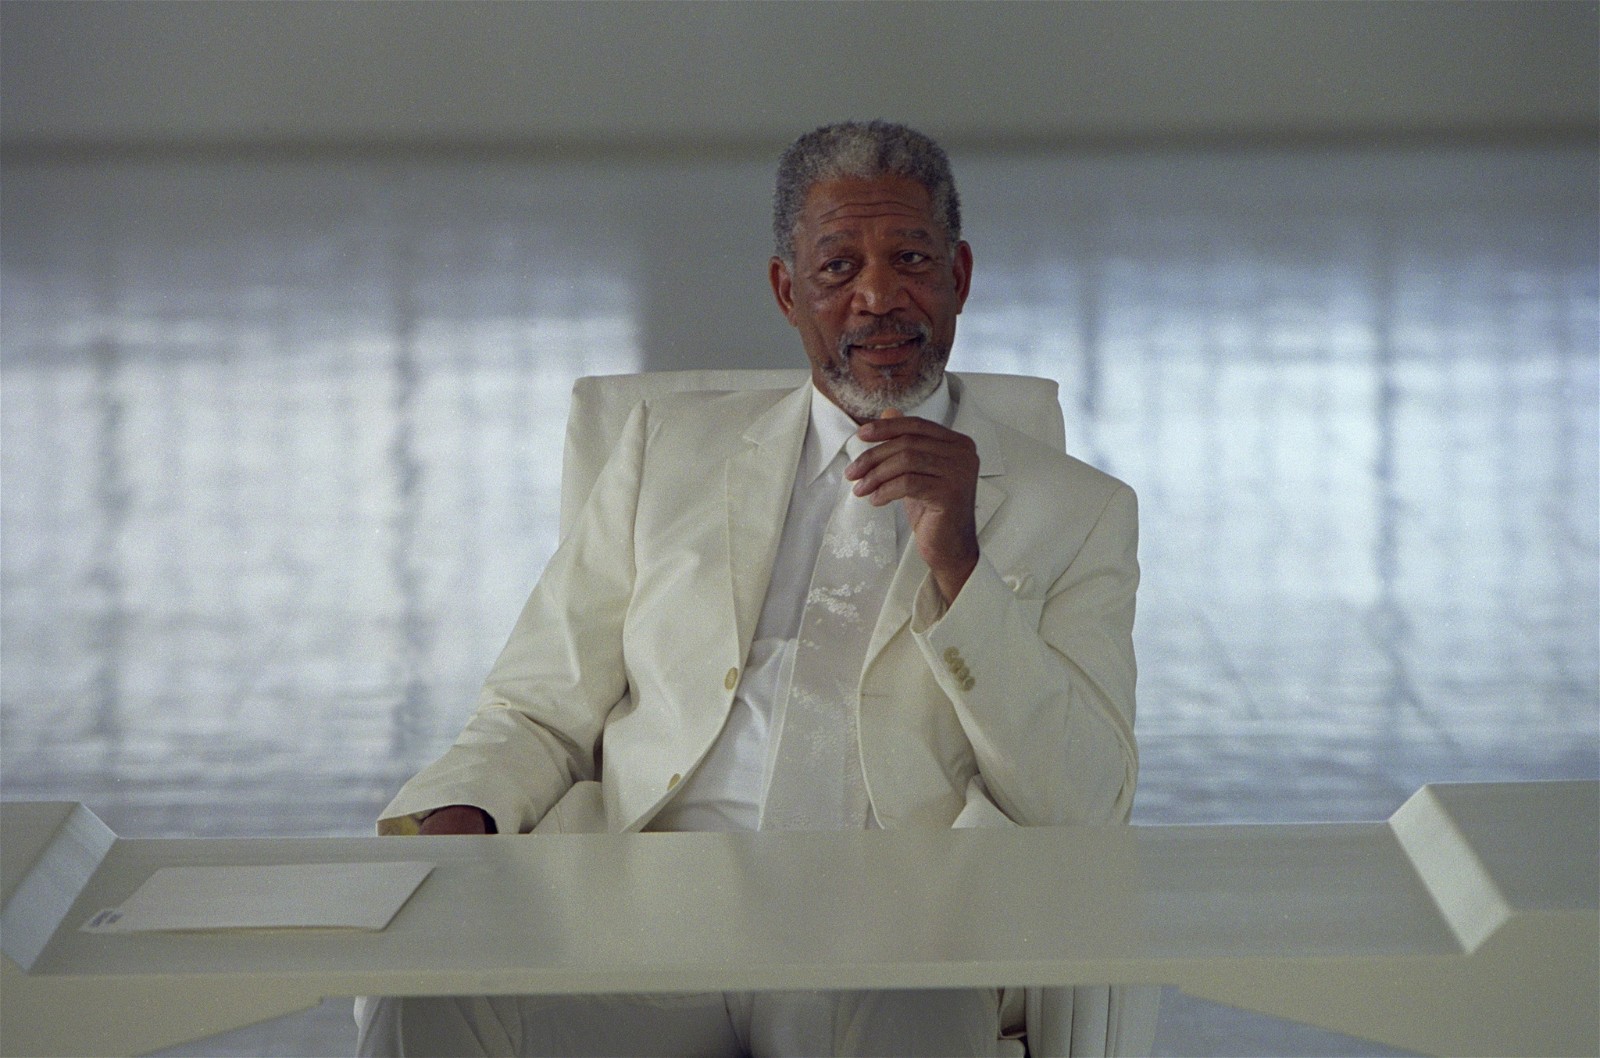 Morgan Freeman as God in a still from Bruce Almighty